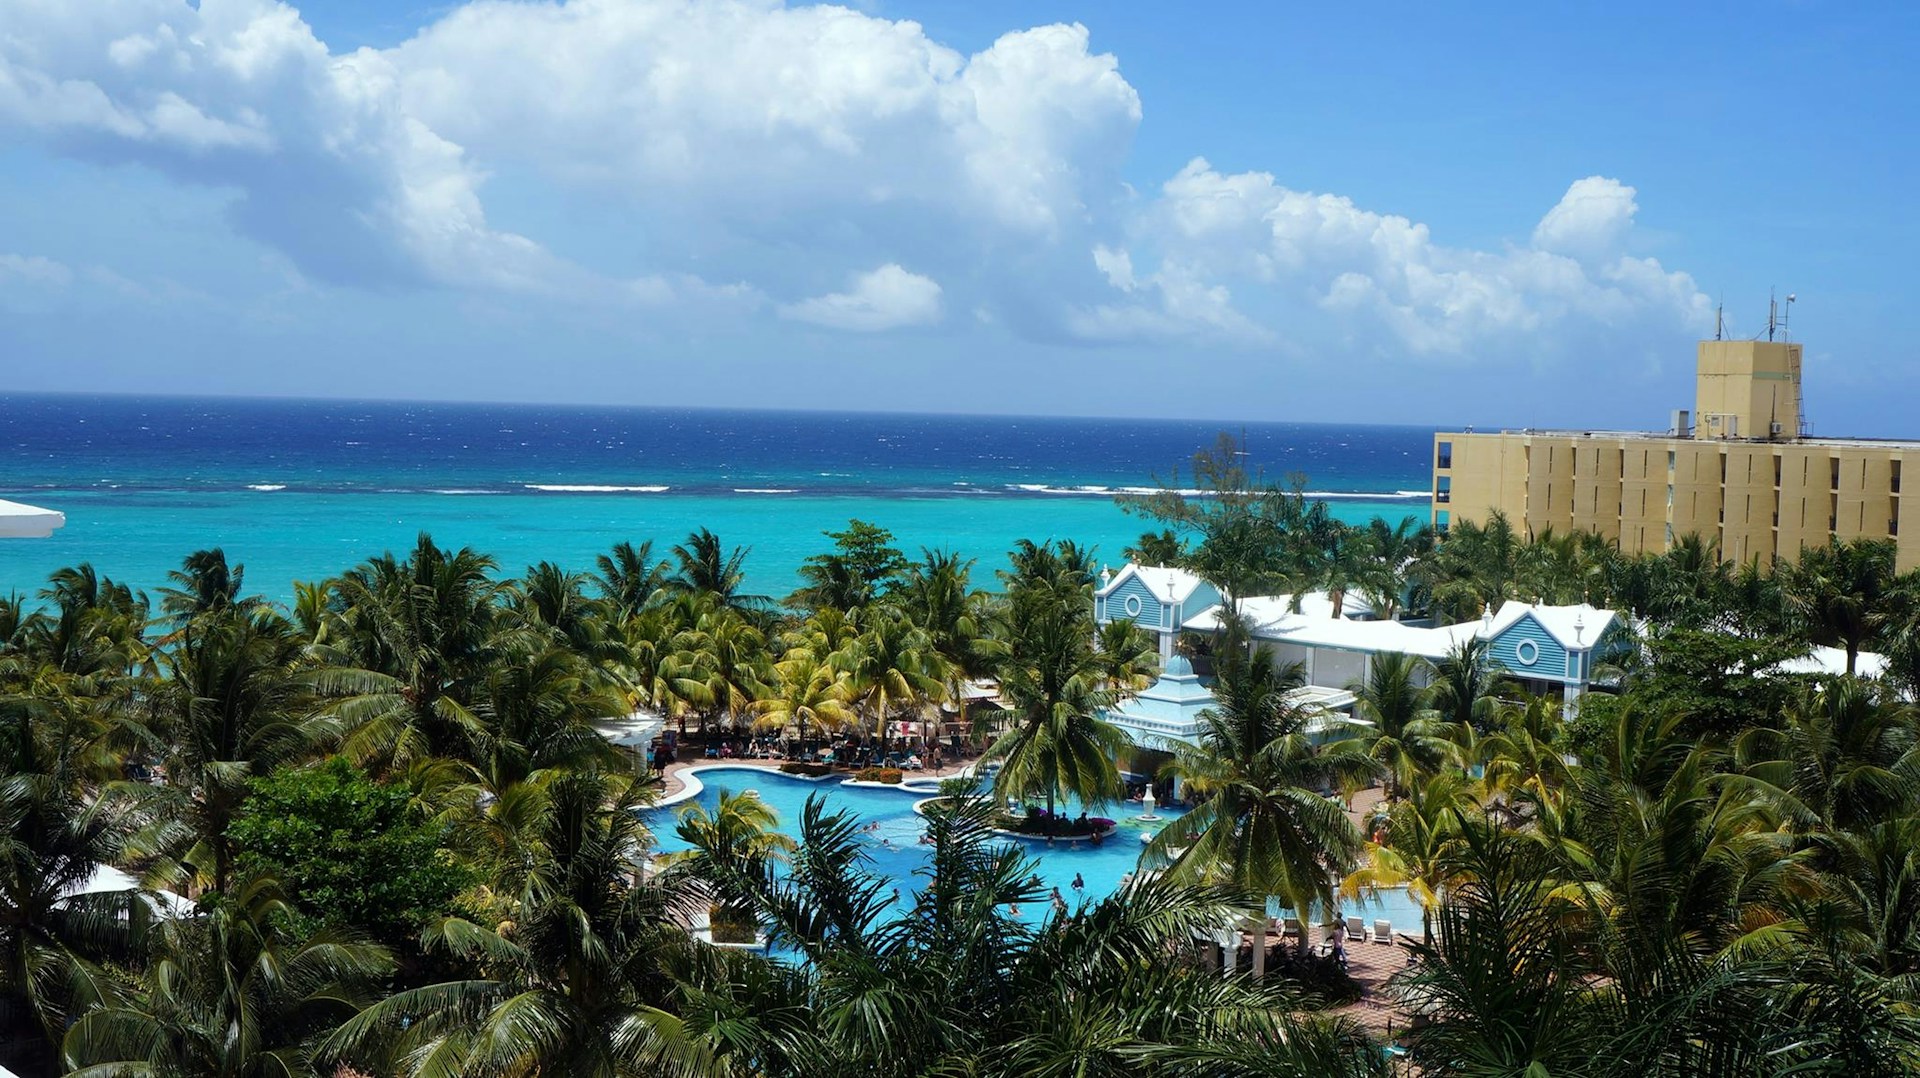 Serenity Overlooking Shaw Park Beach Hotels in Ocho Rios, Jamaica